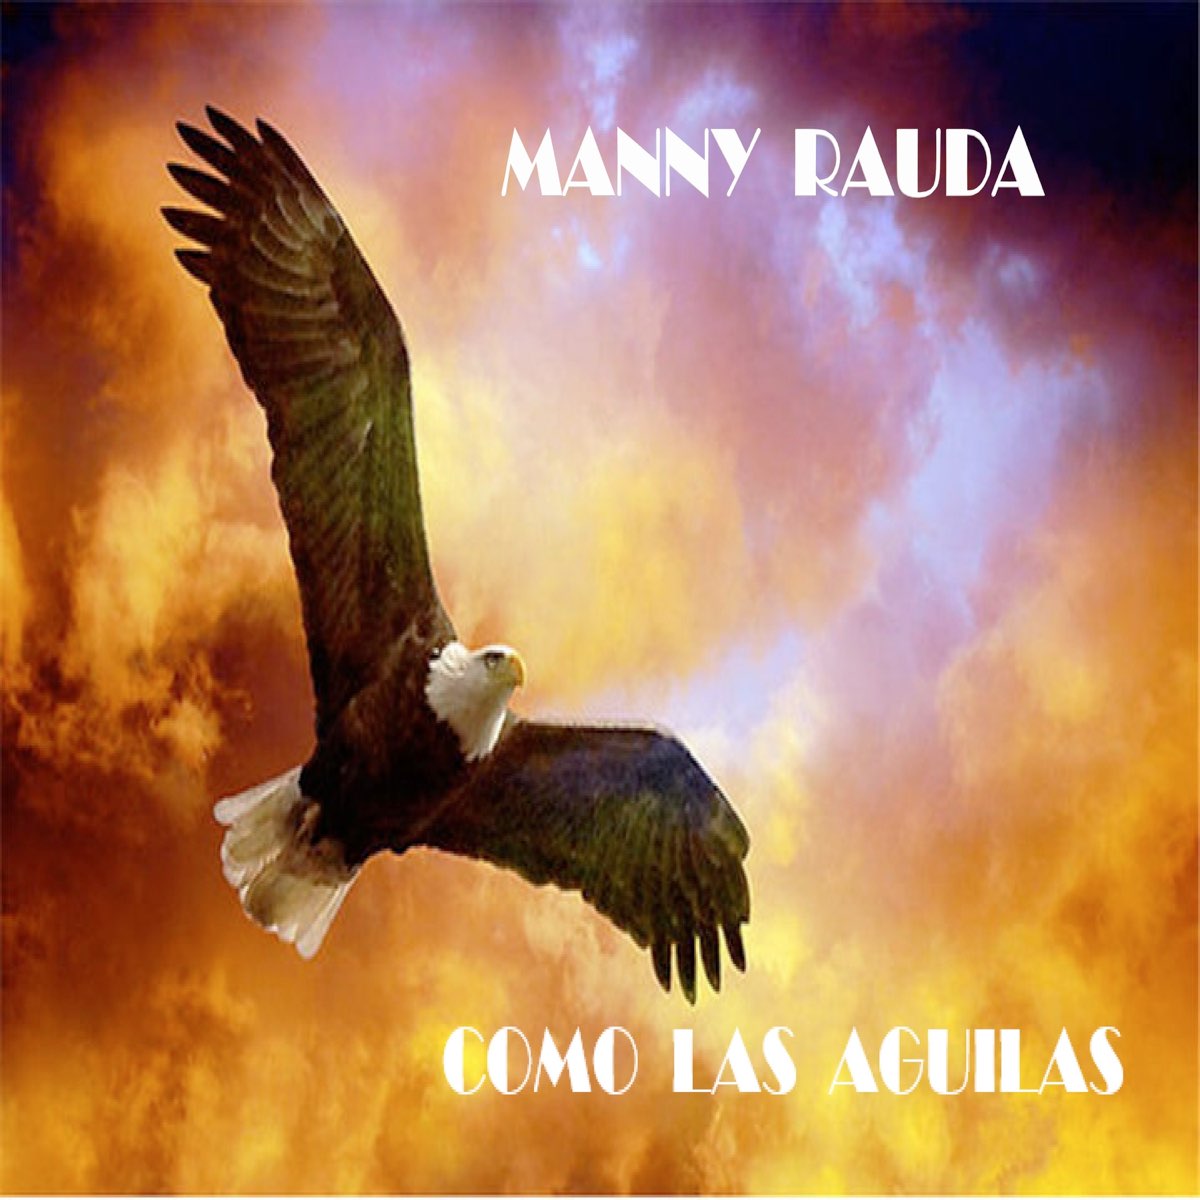 Como las aguilas - Single by Manny Rauda on Apple Music